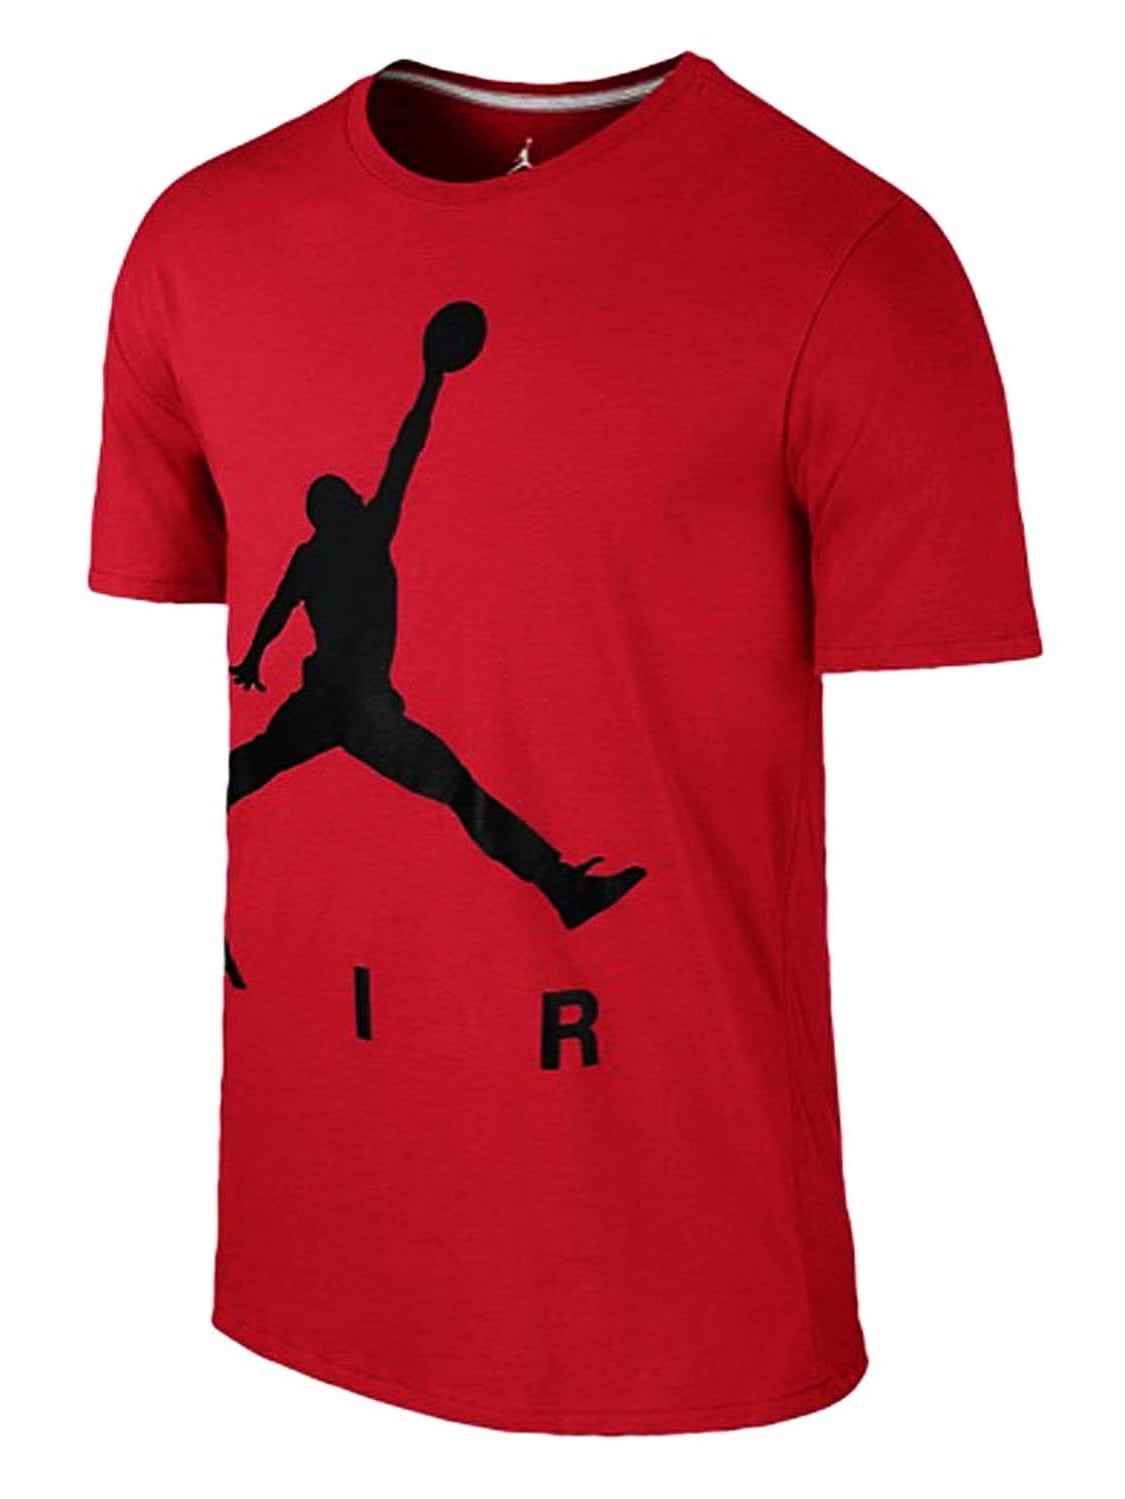 Jordan - Men's Nike Jumpman Air Matte Basketball T-Shirt - Walmart.com